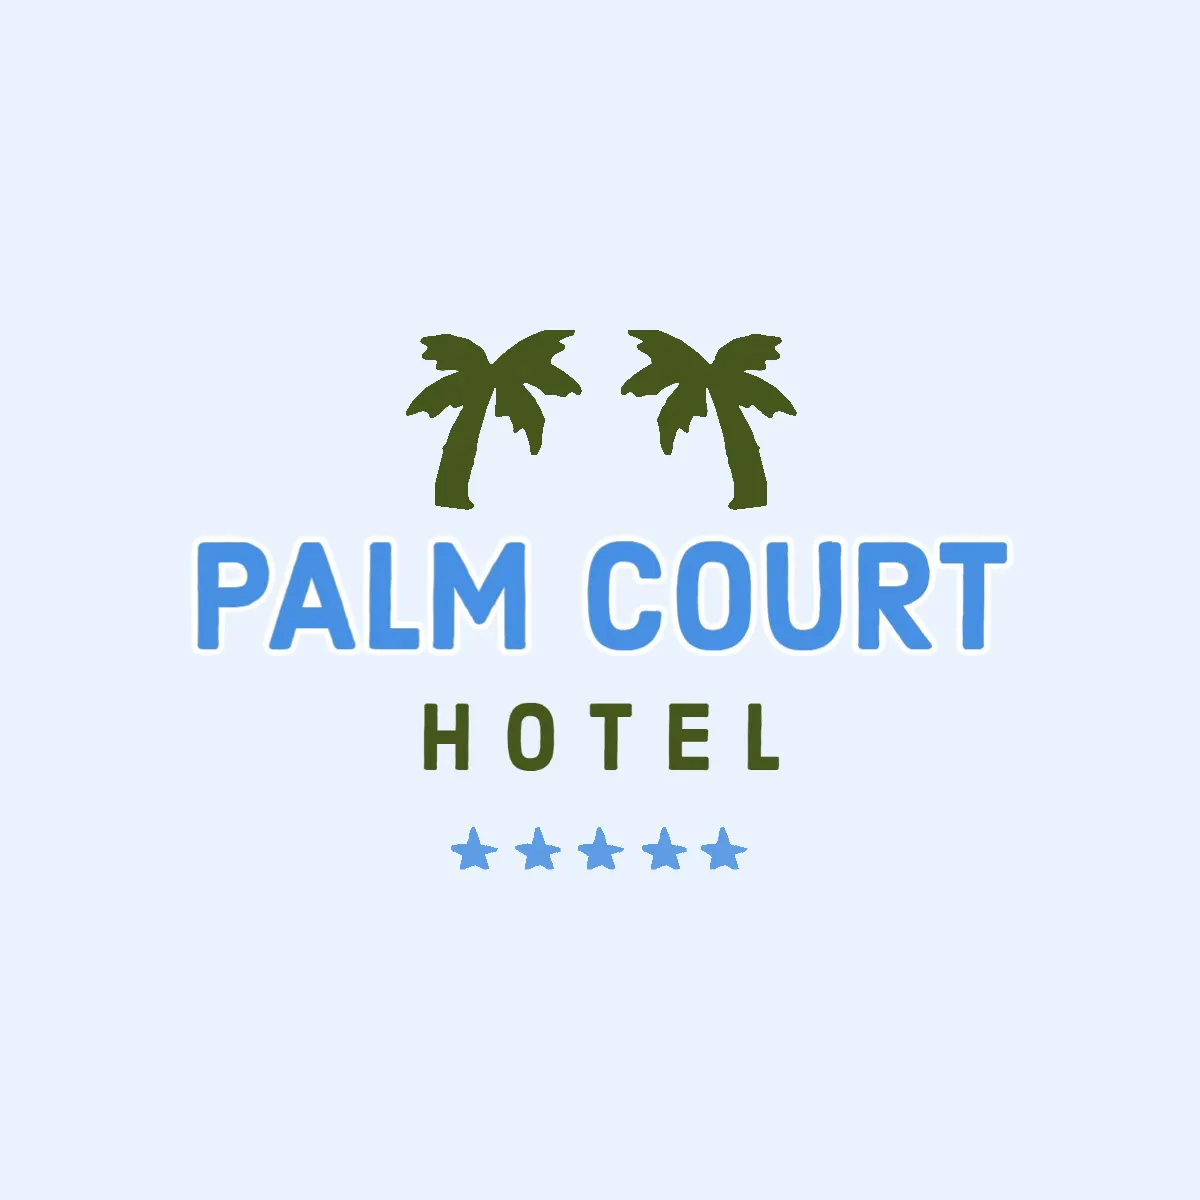 Blue Green Palm Court Hotel Logo